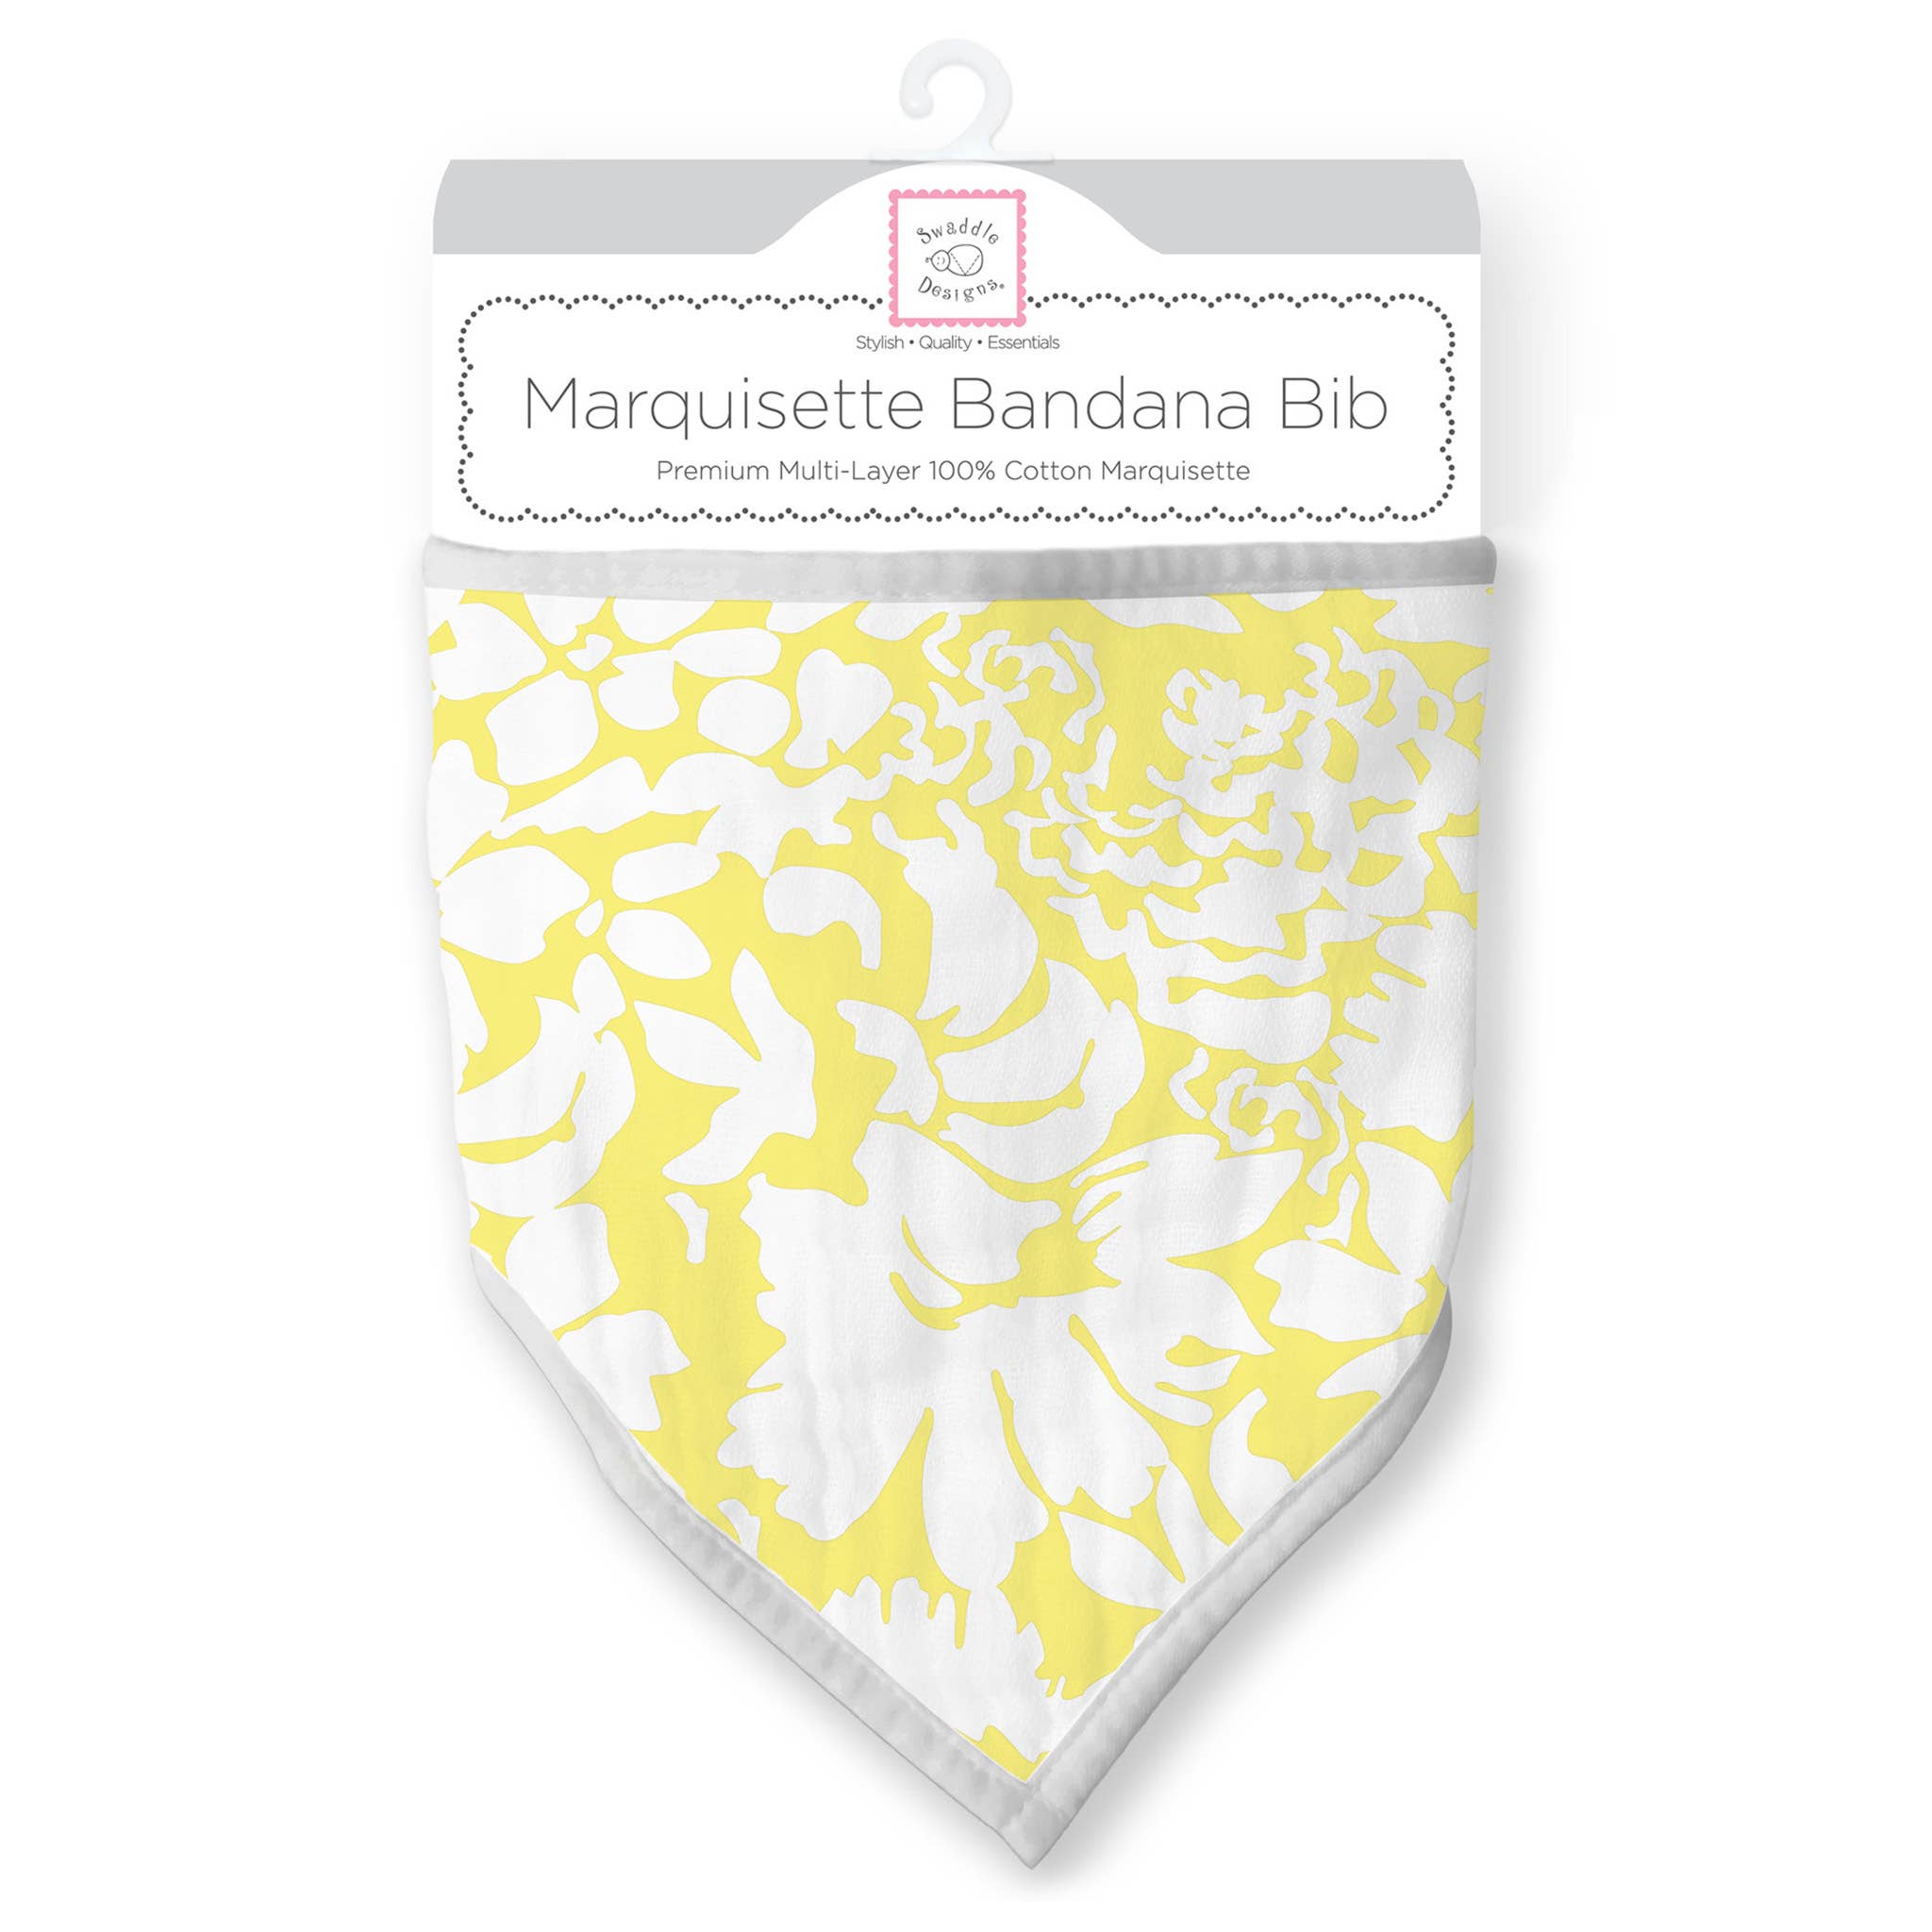 Marquisette Bandana Bib, Lush, Yellow